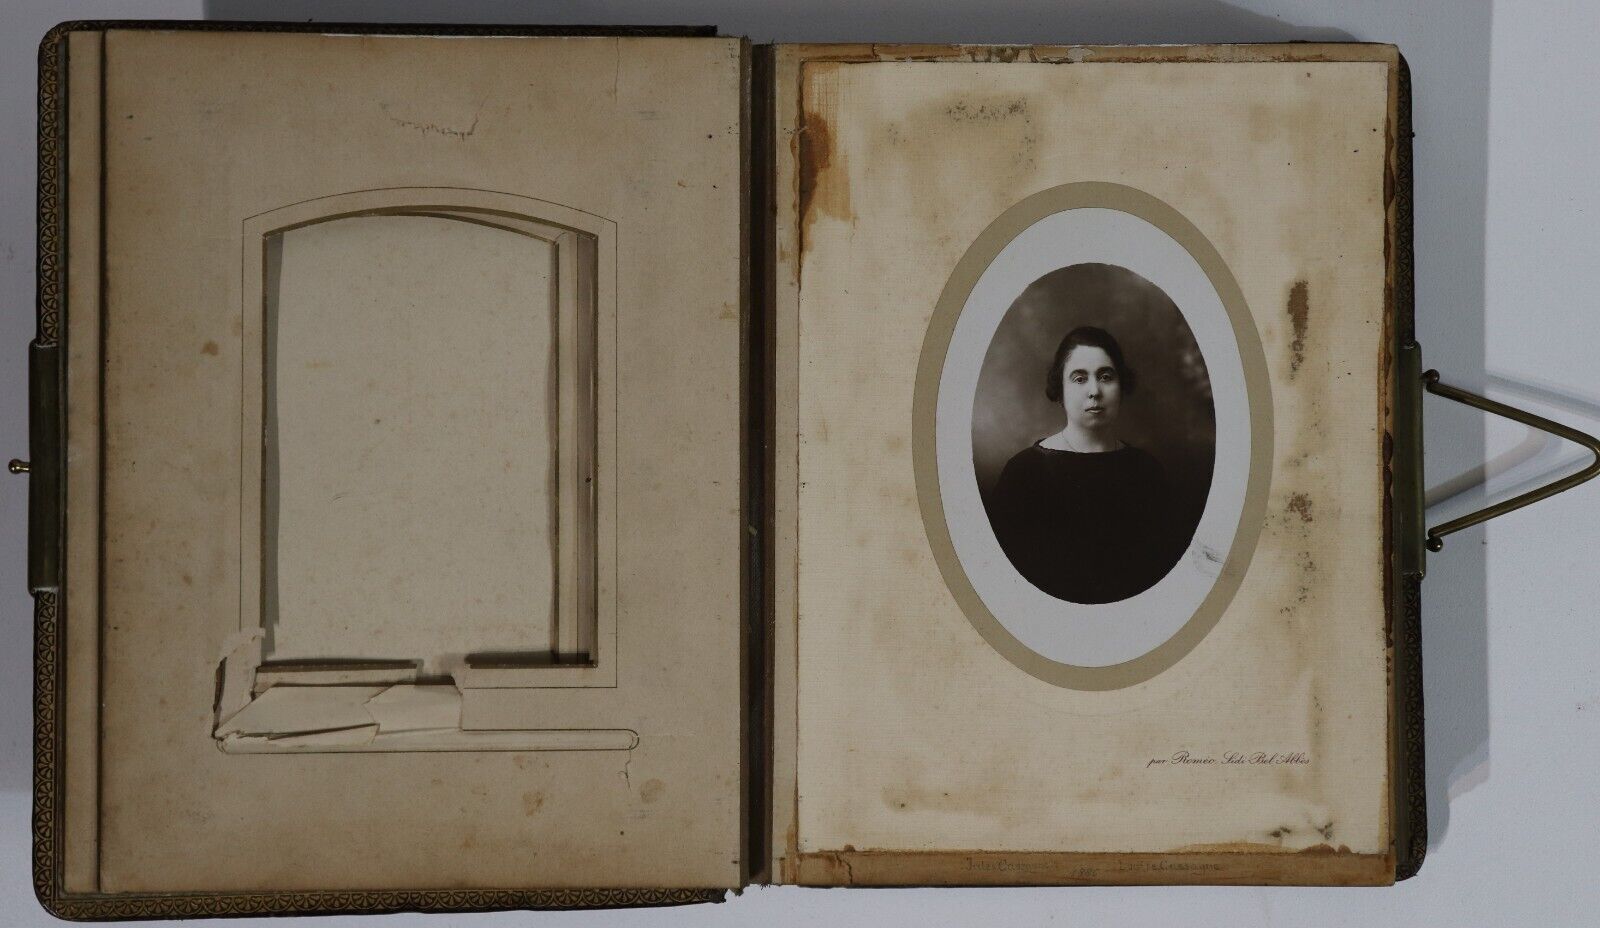 Antique Victorian Photo Album - c1885 - Leather With Brass Clasp - 27cm x 22cm